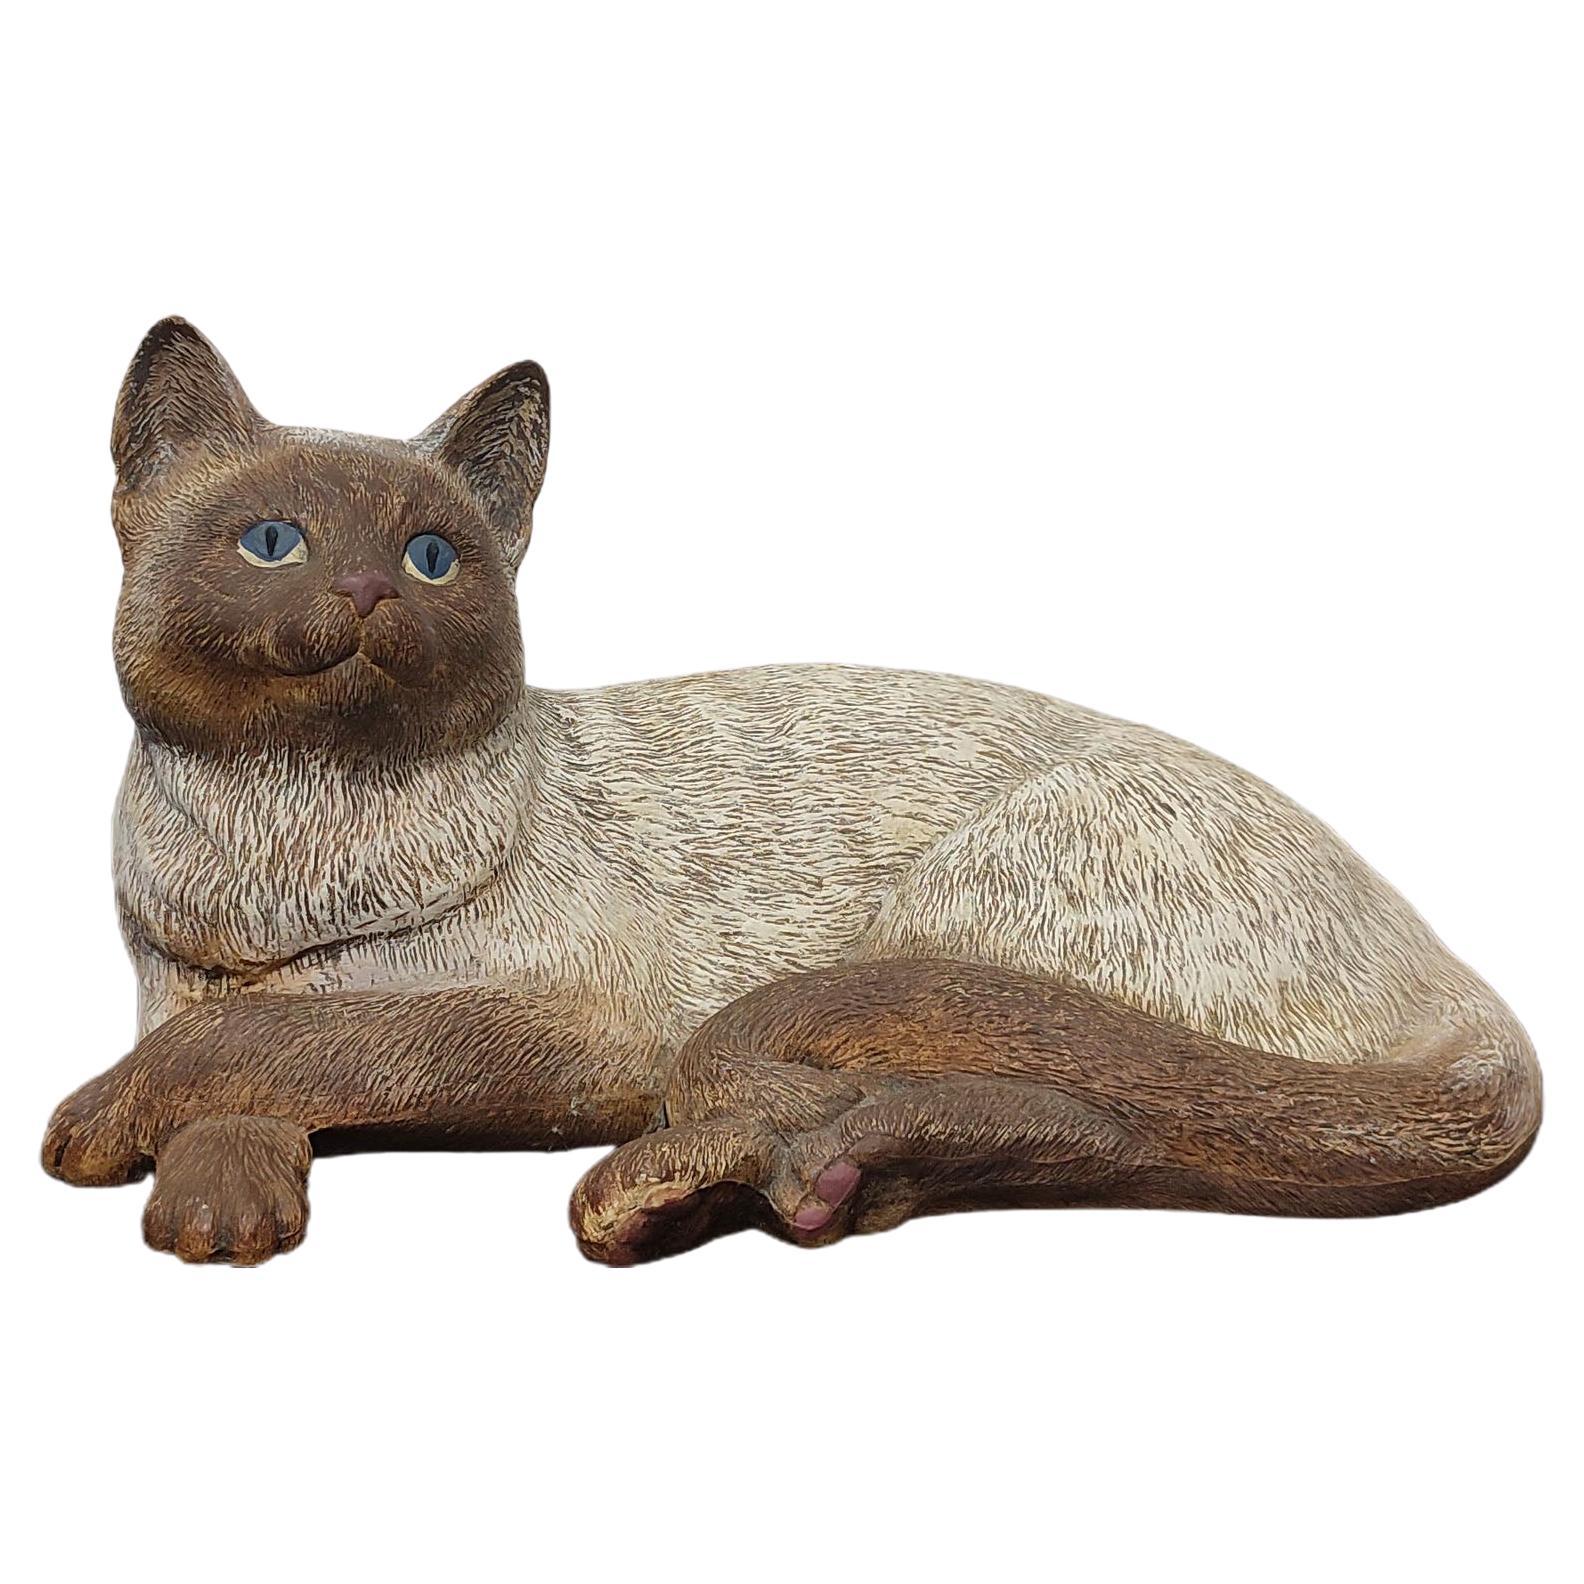 Sammlerstück Keramik Siamese Katzen-Skulptur, lebensgroß